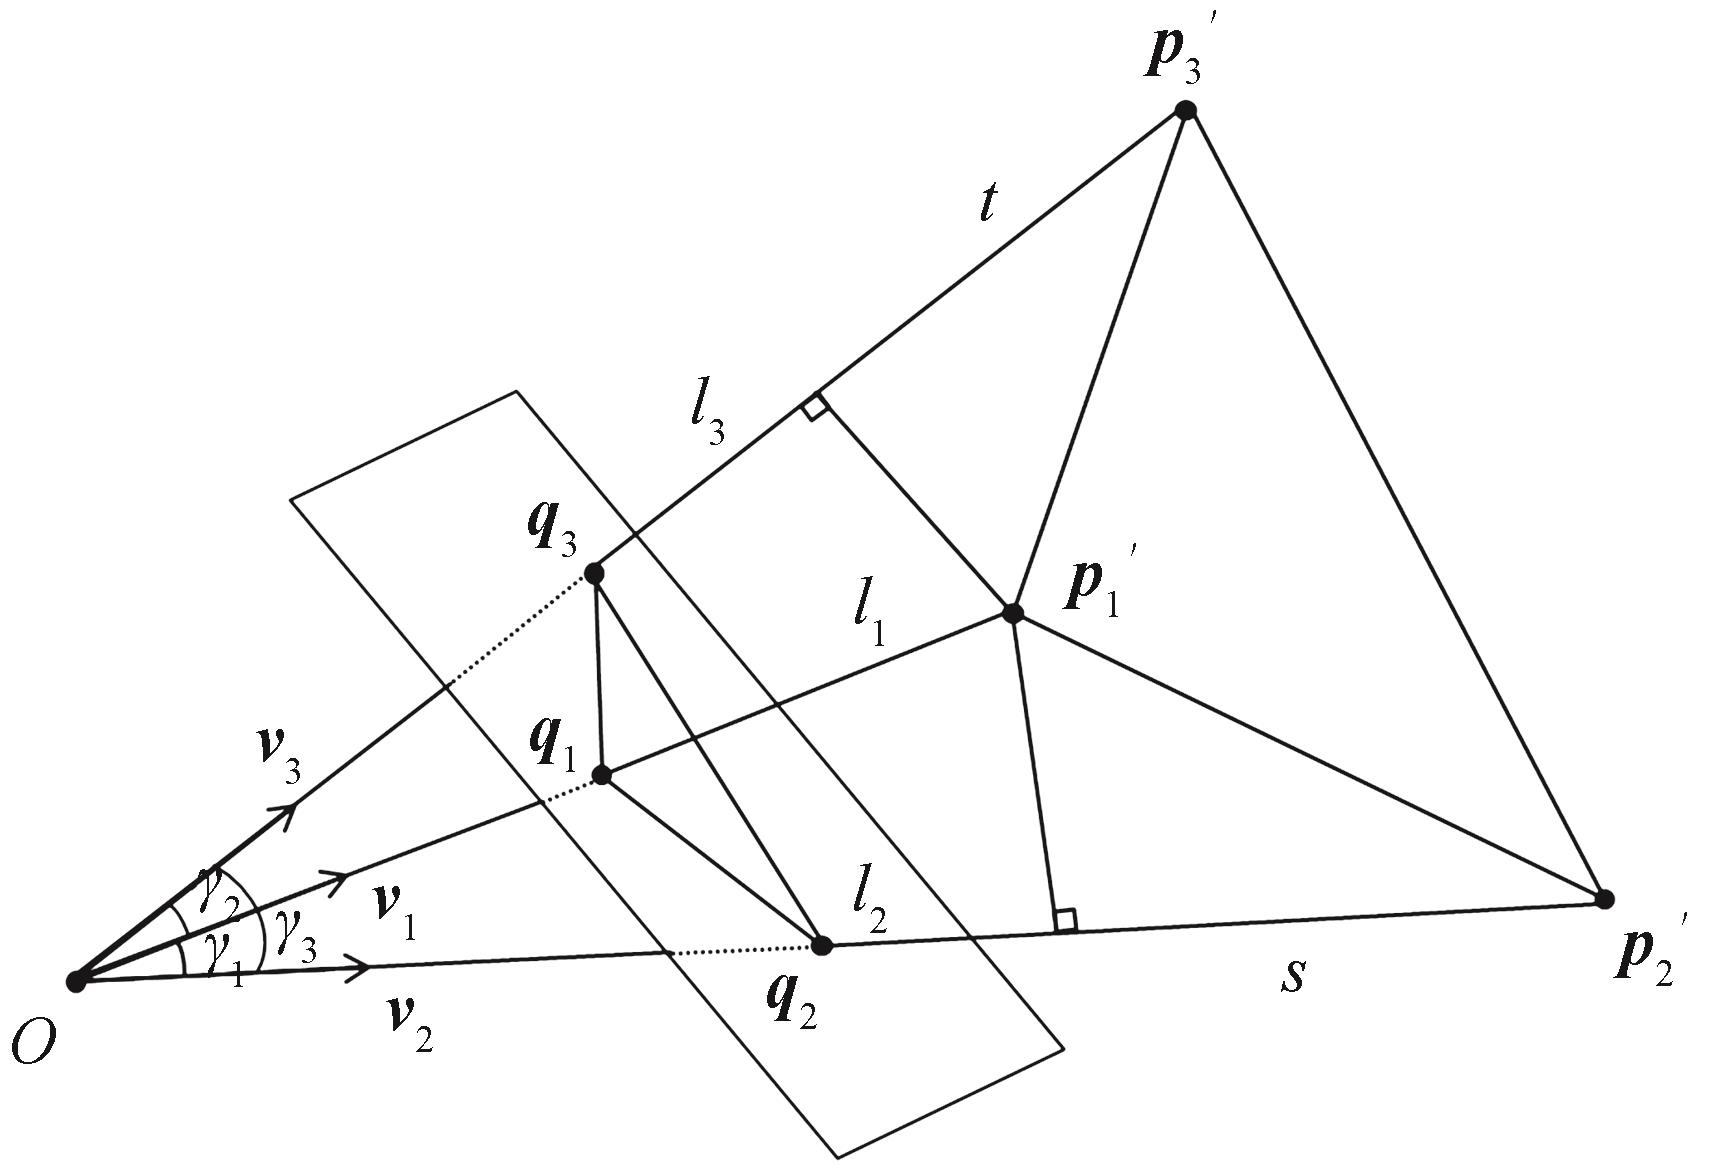 Schematic diagram of PST algorithm